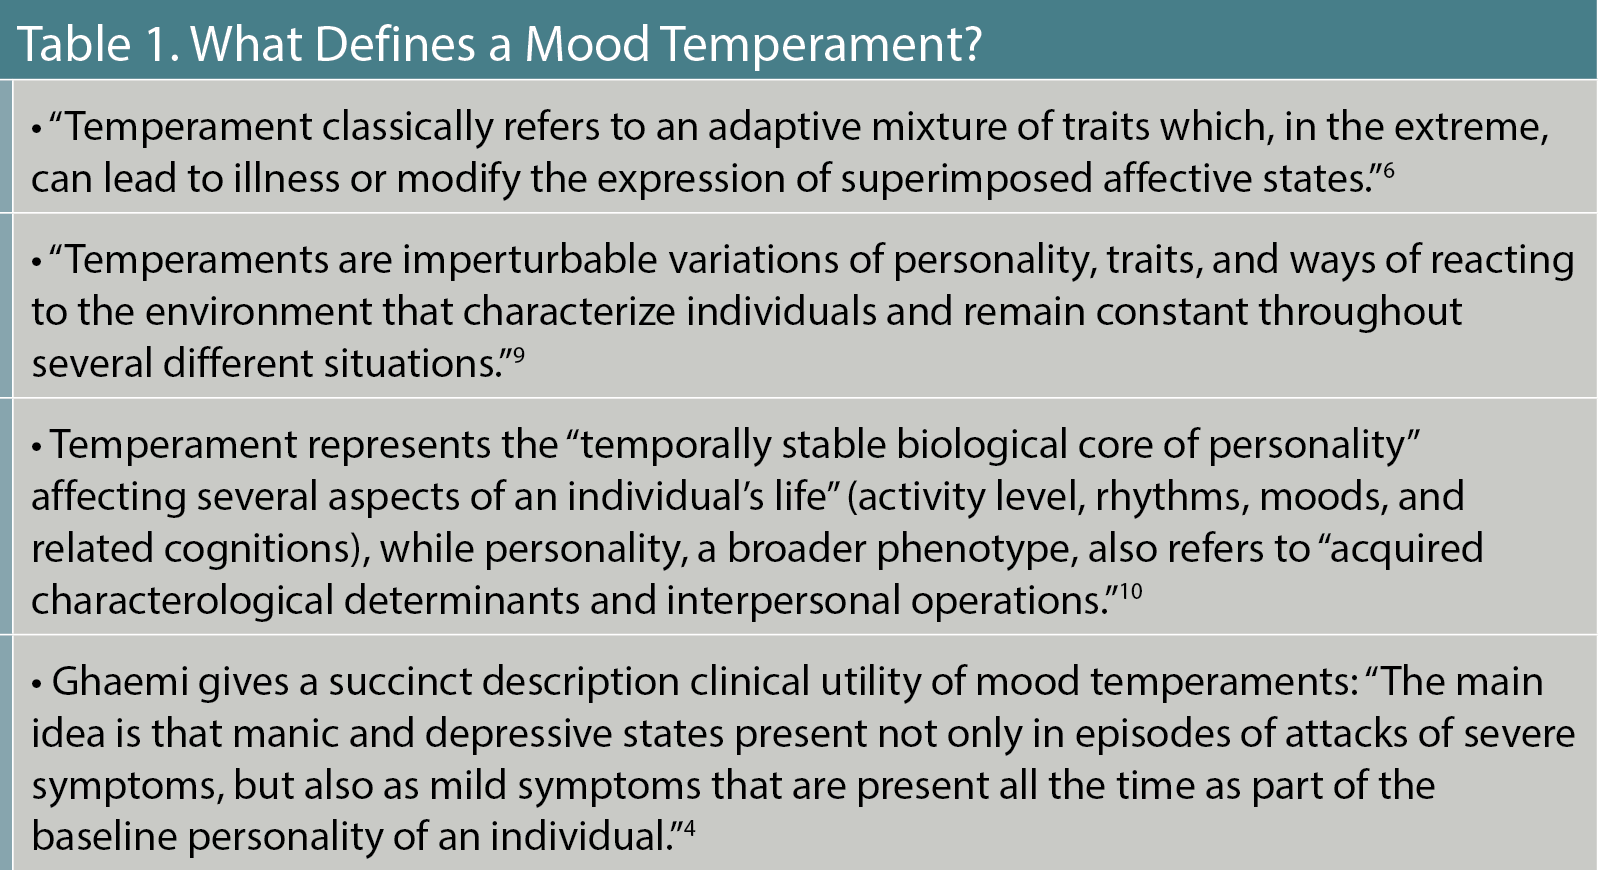 Table 1. What Defines a Mood Temperament?